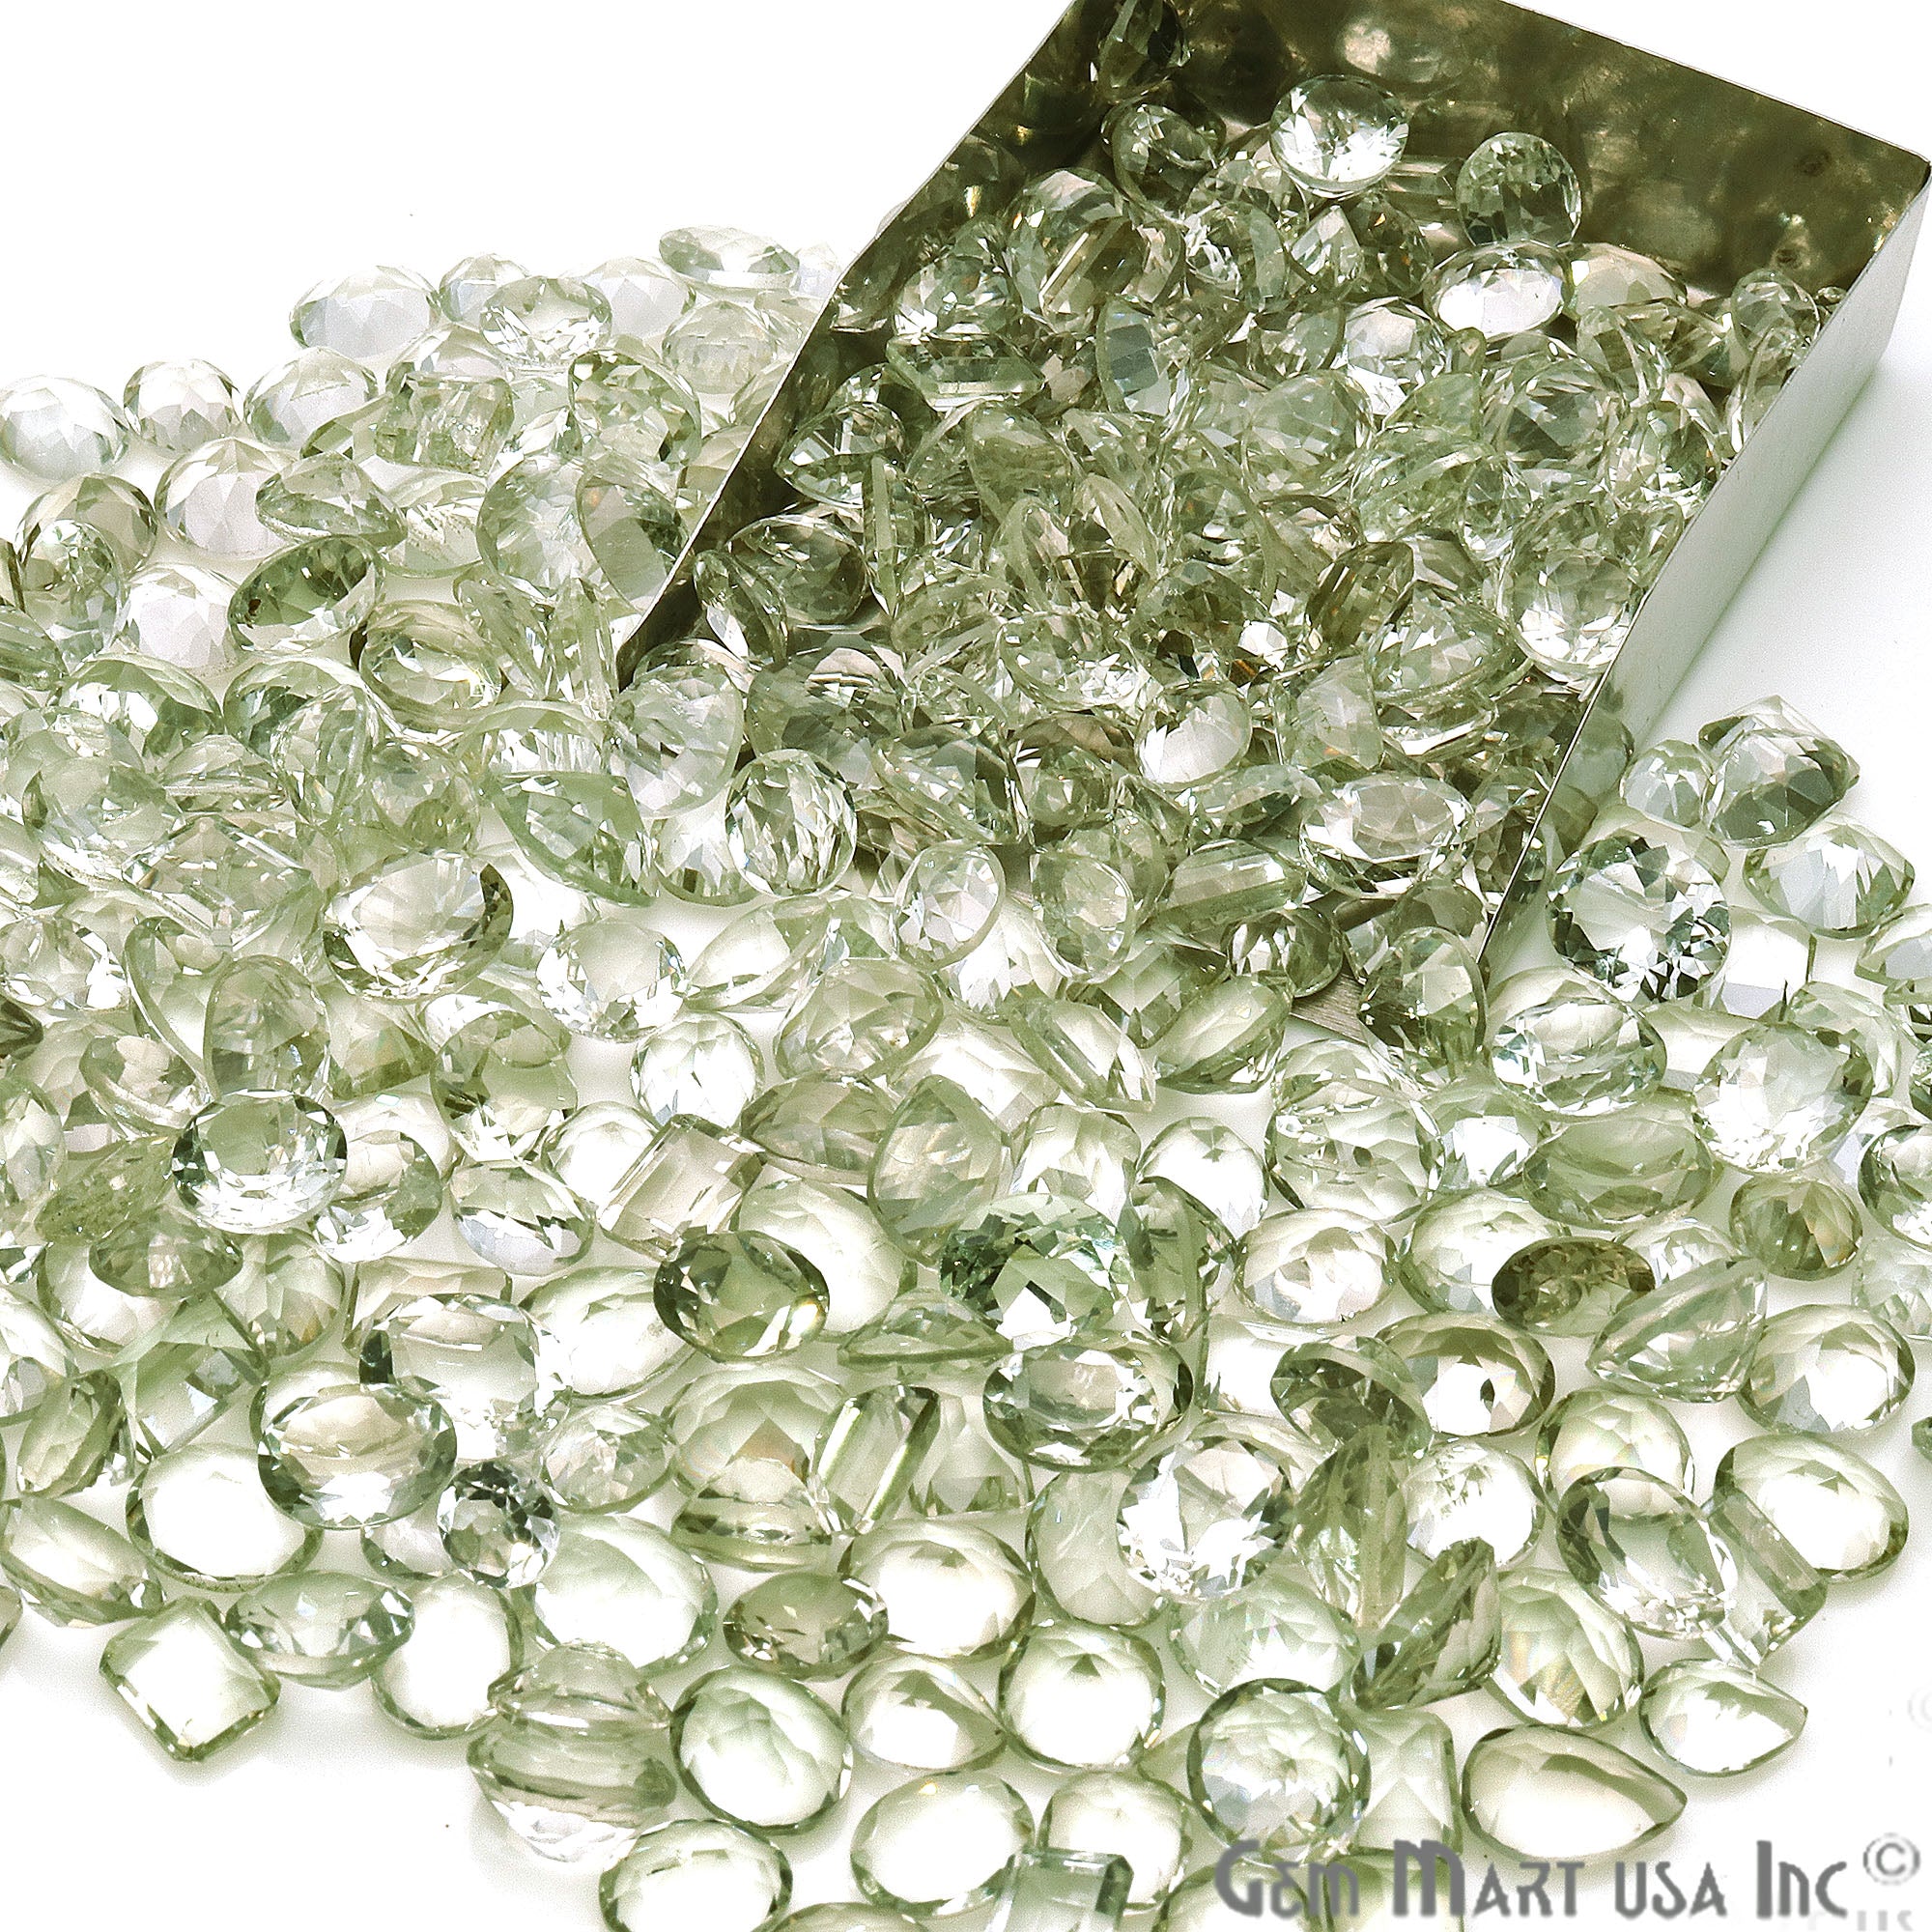 Natural Green Amethyst Mix Shape Loose Gemstones,Precious Stones - GemMartUSA